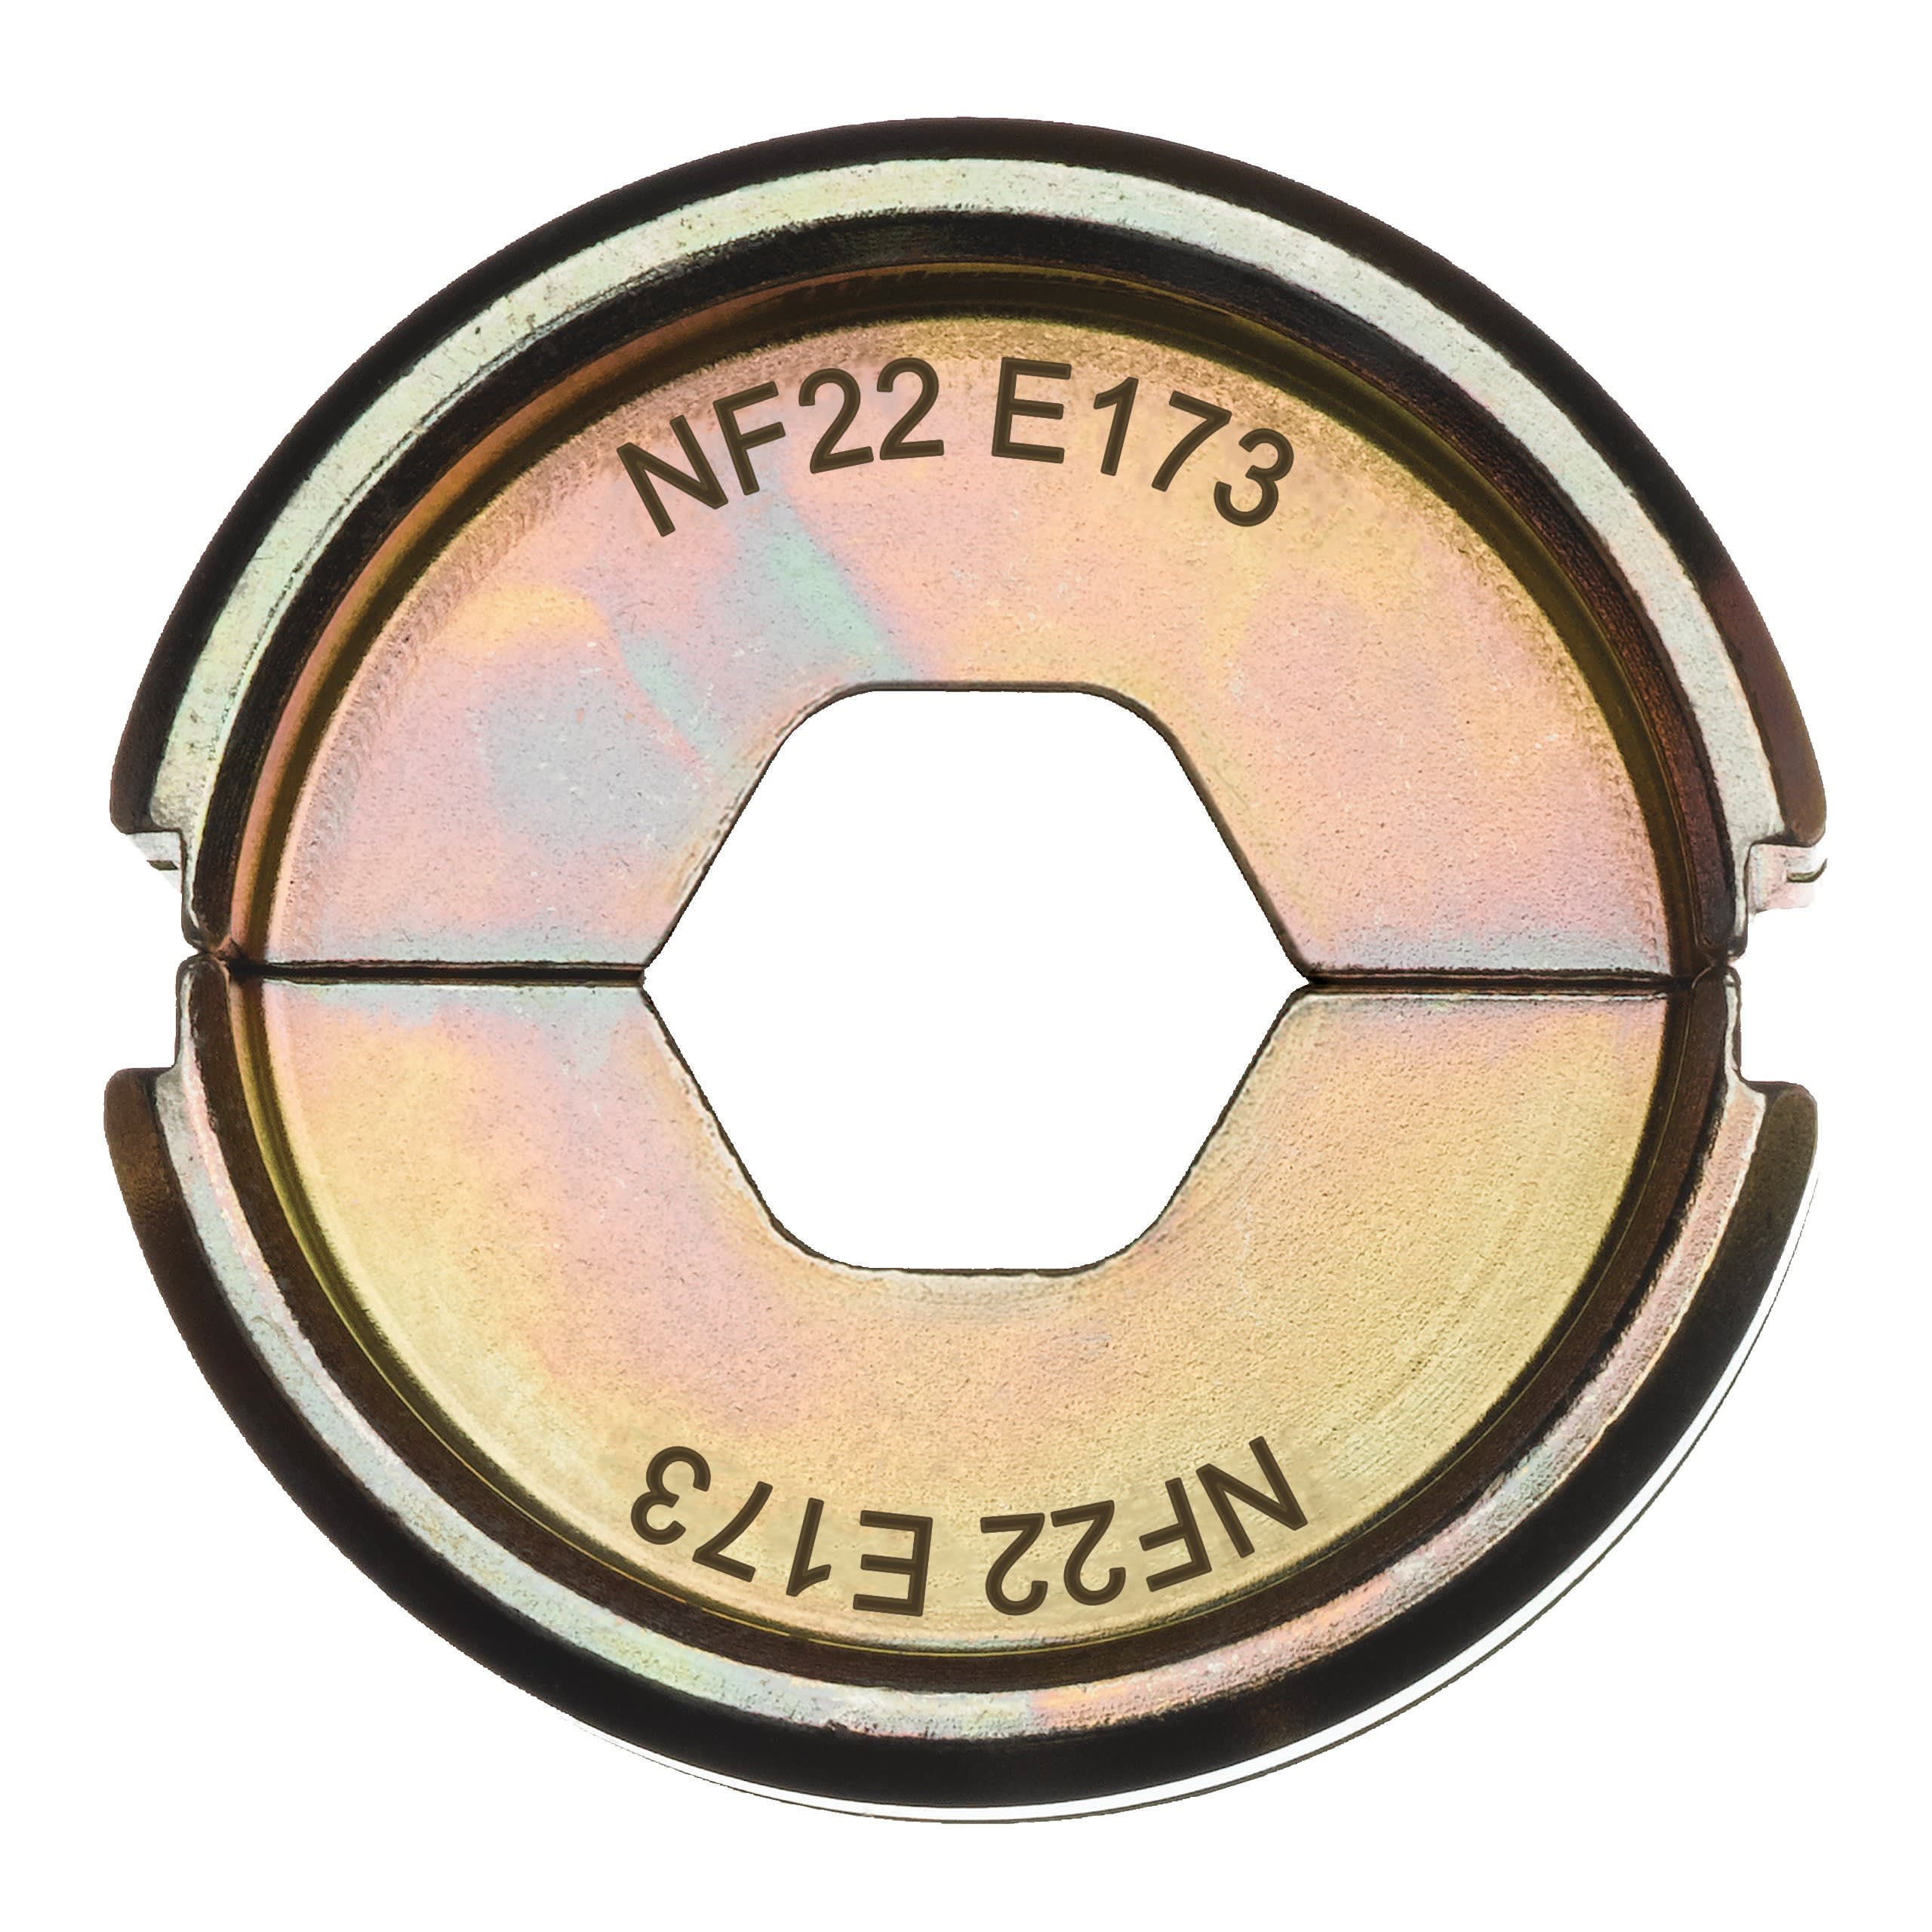 MILWAUKEE - MATRICE POUR SERTISSEUSE FORCE LOGIC (ELECTRICITE) NF22 E173